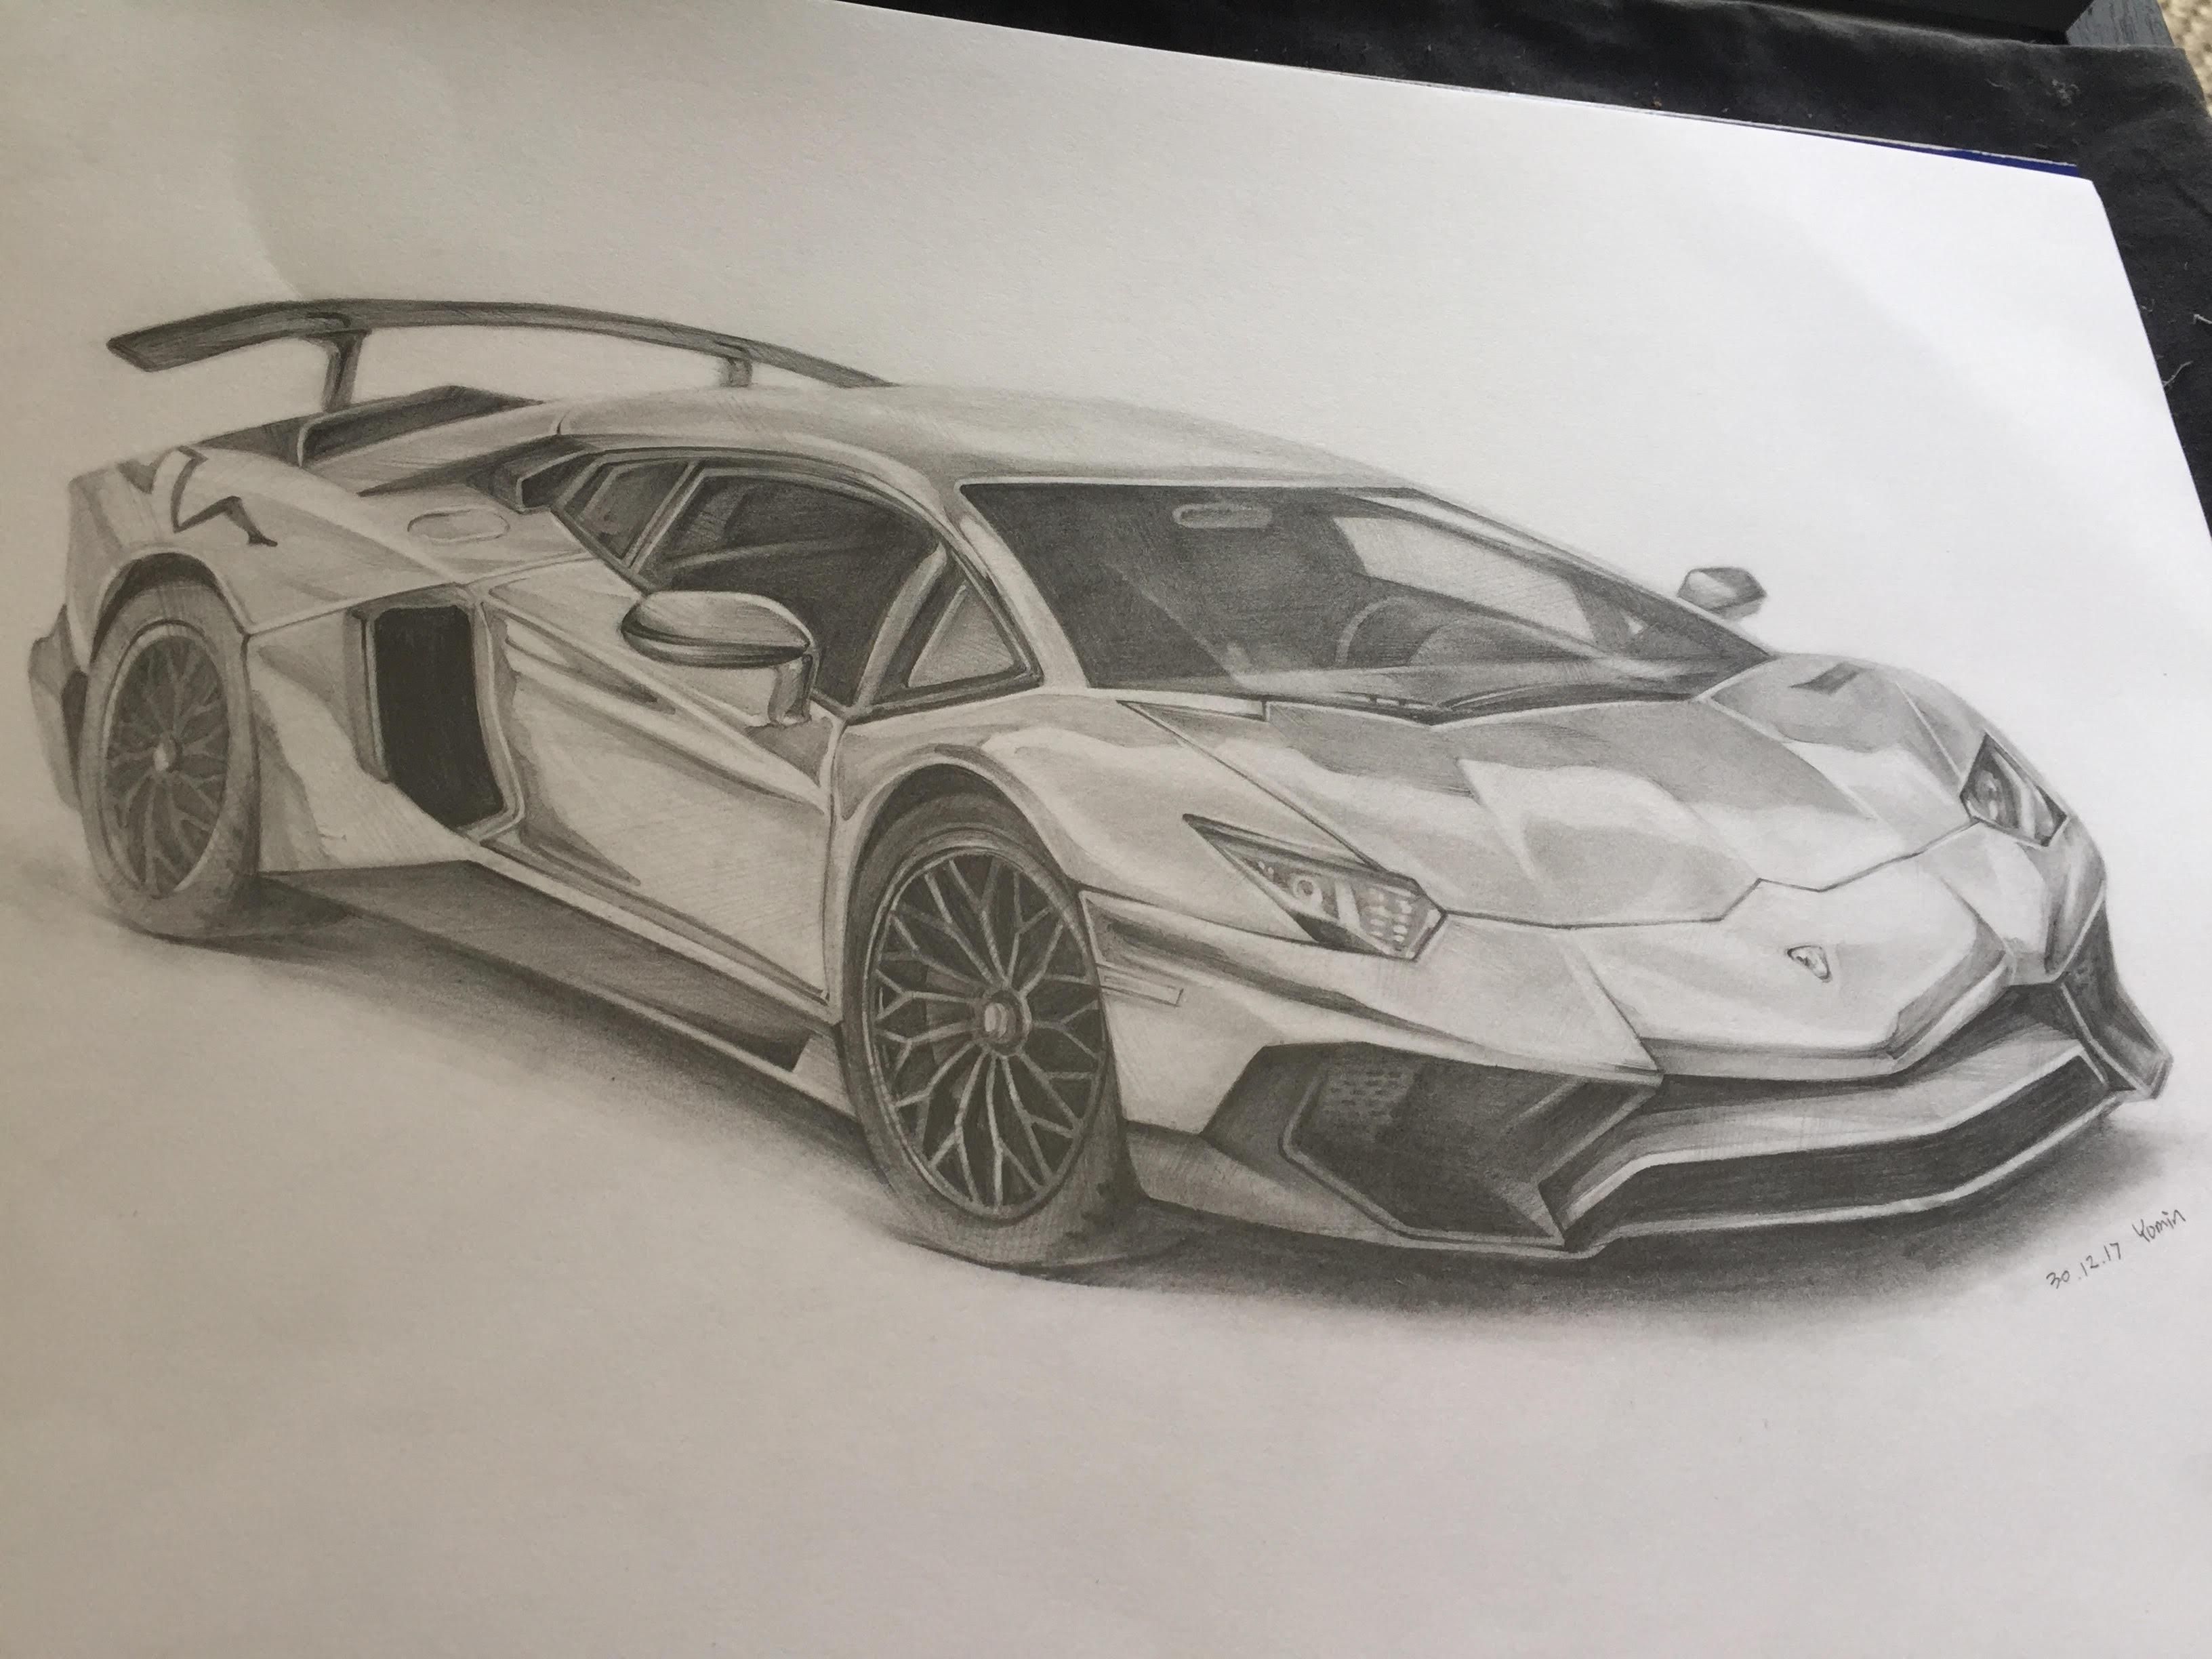 Lamborghini Drawing, Pencil, Sketch, Colorful, Realistic ...